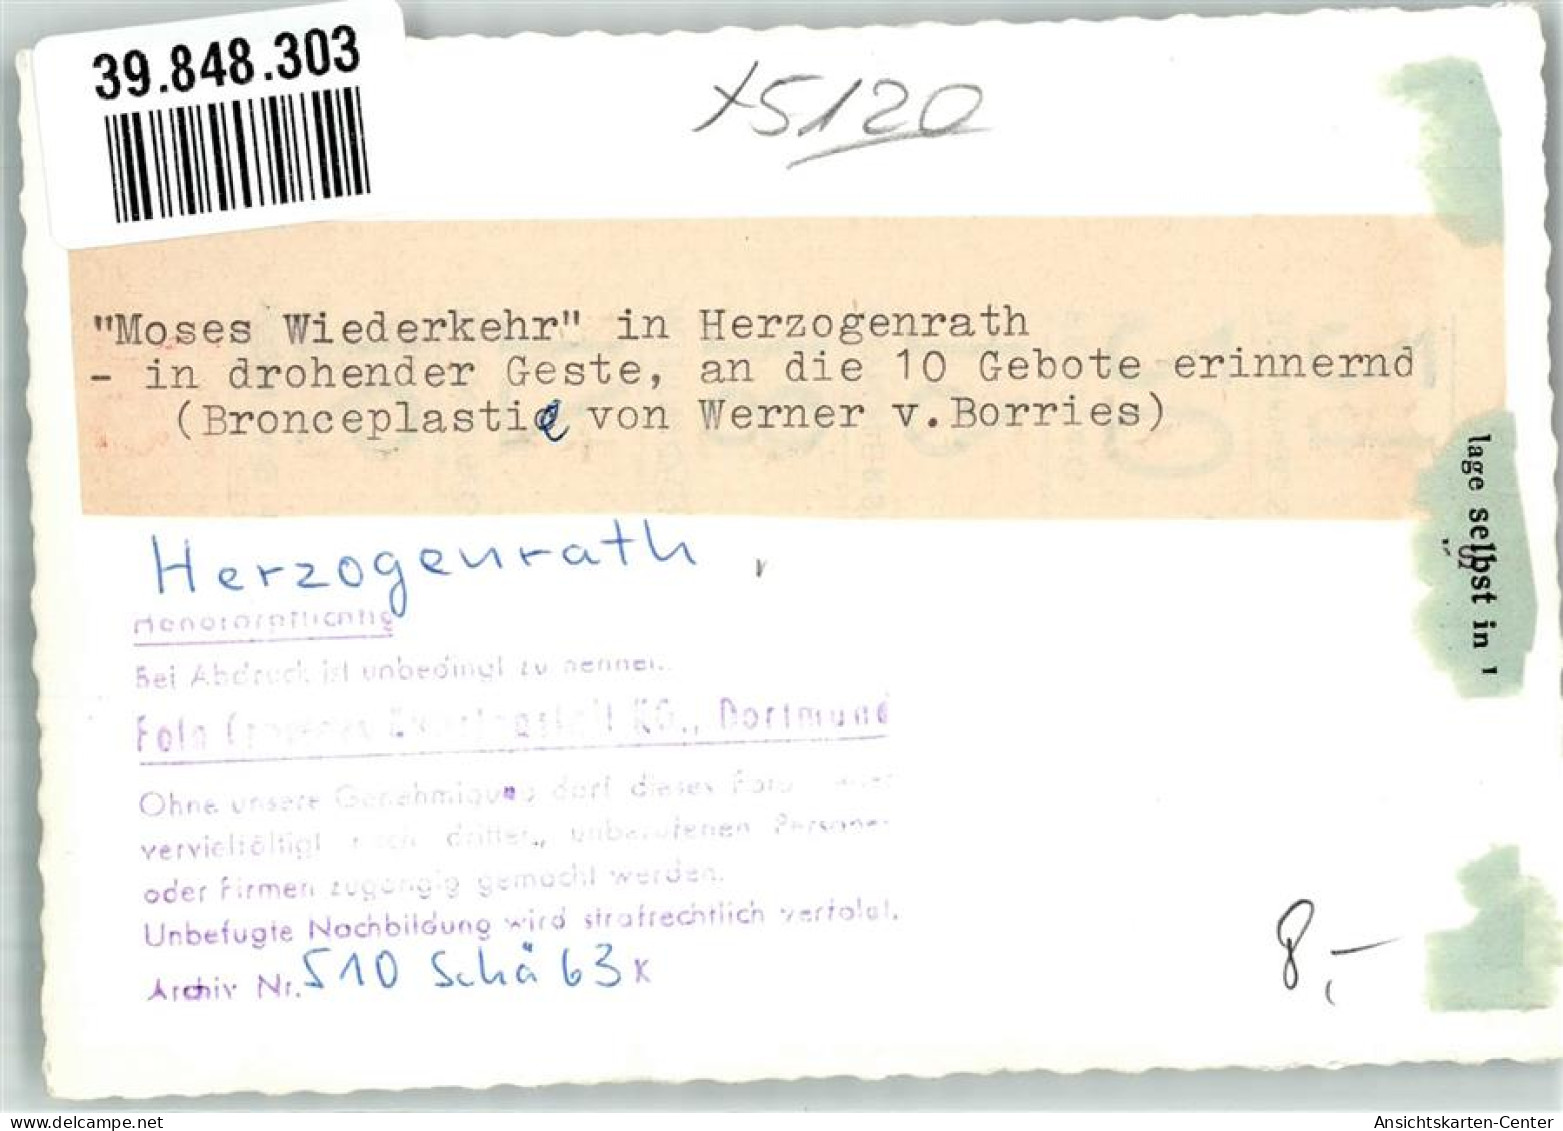 39848303 - Herzogenrath - Herzogenrath